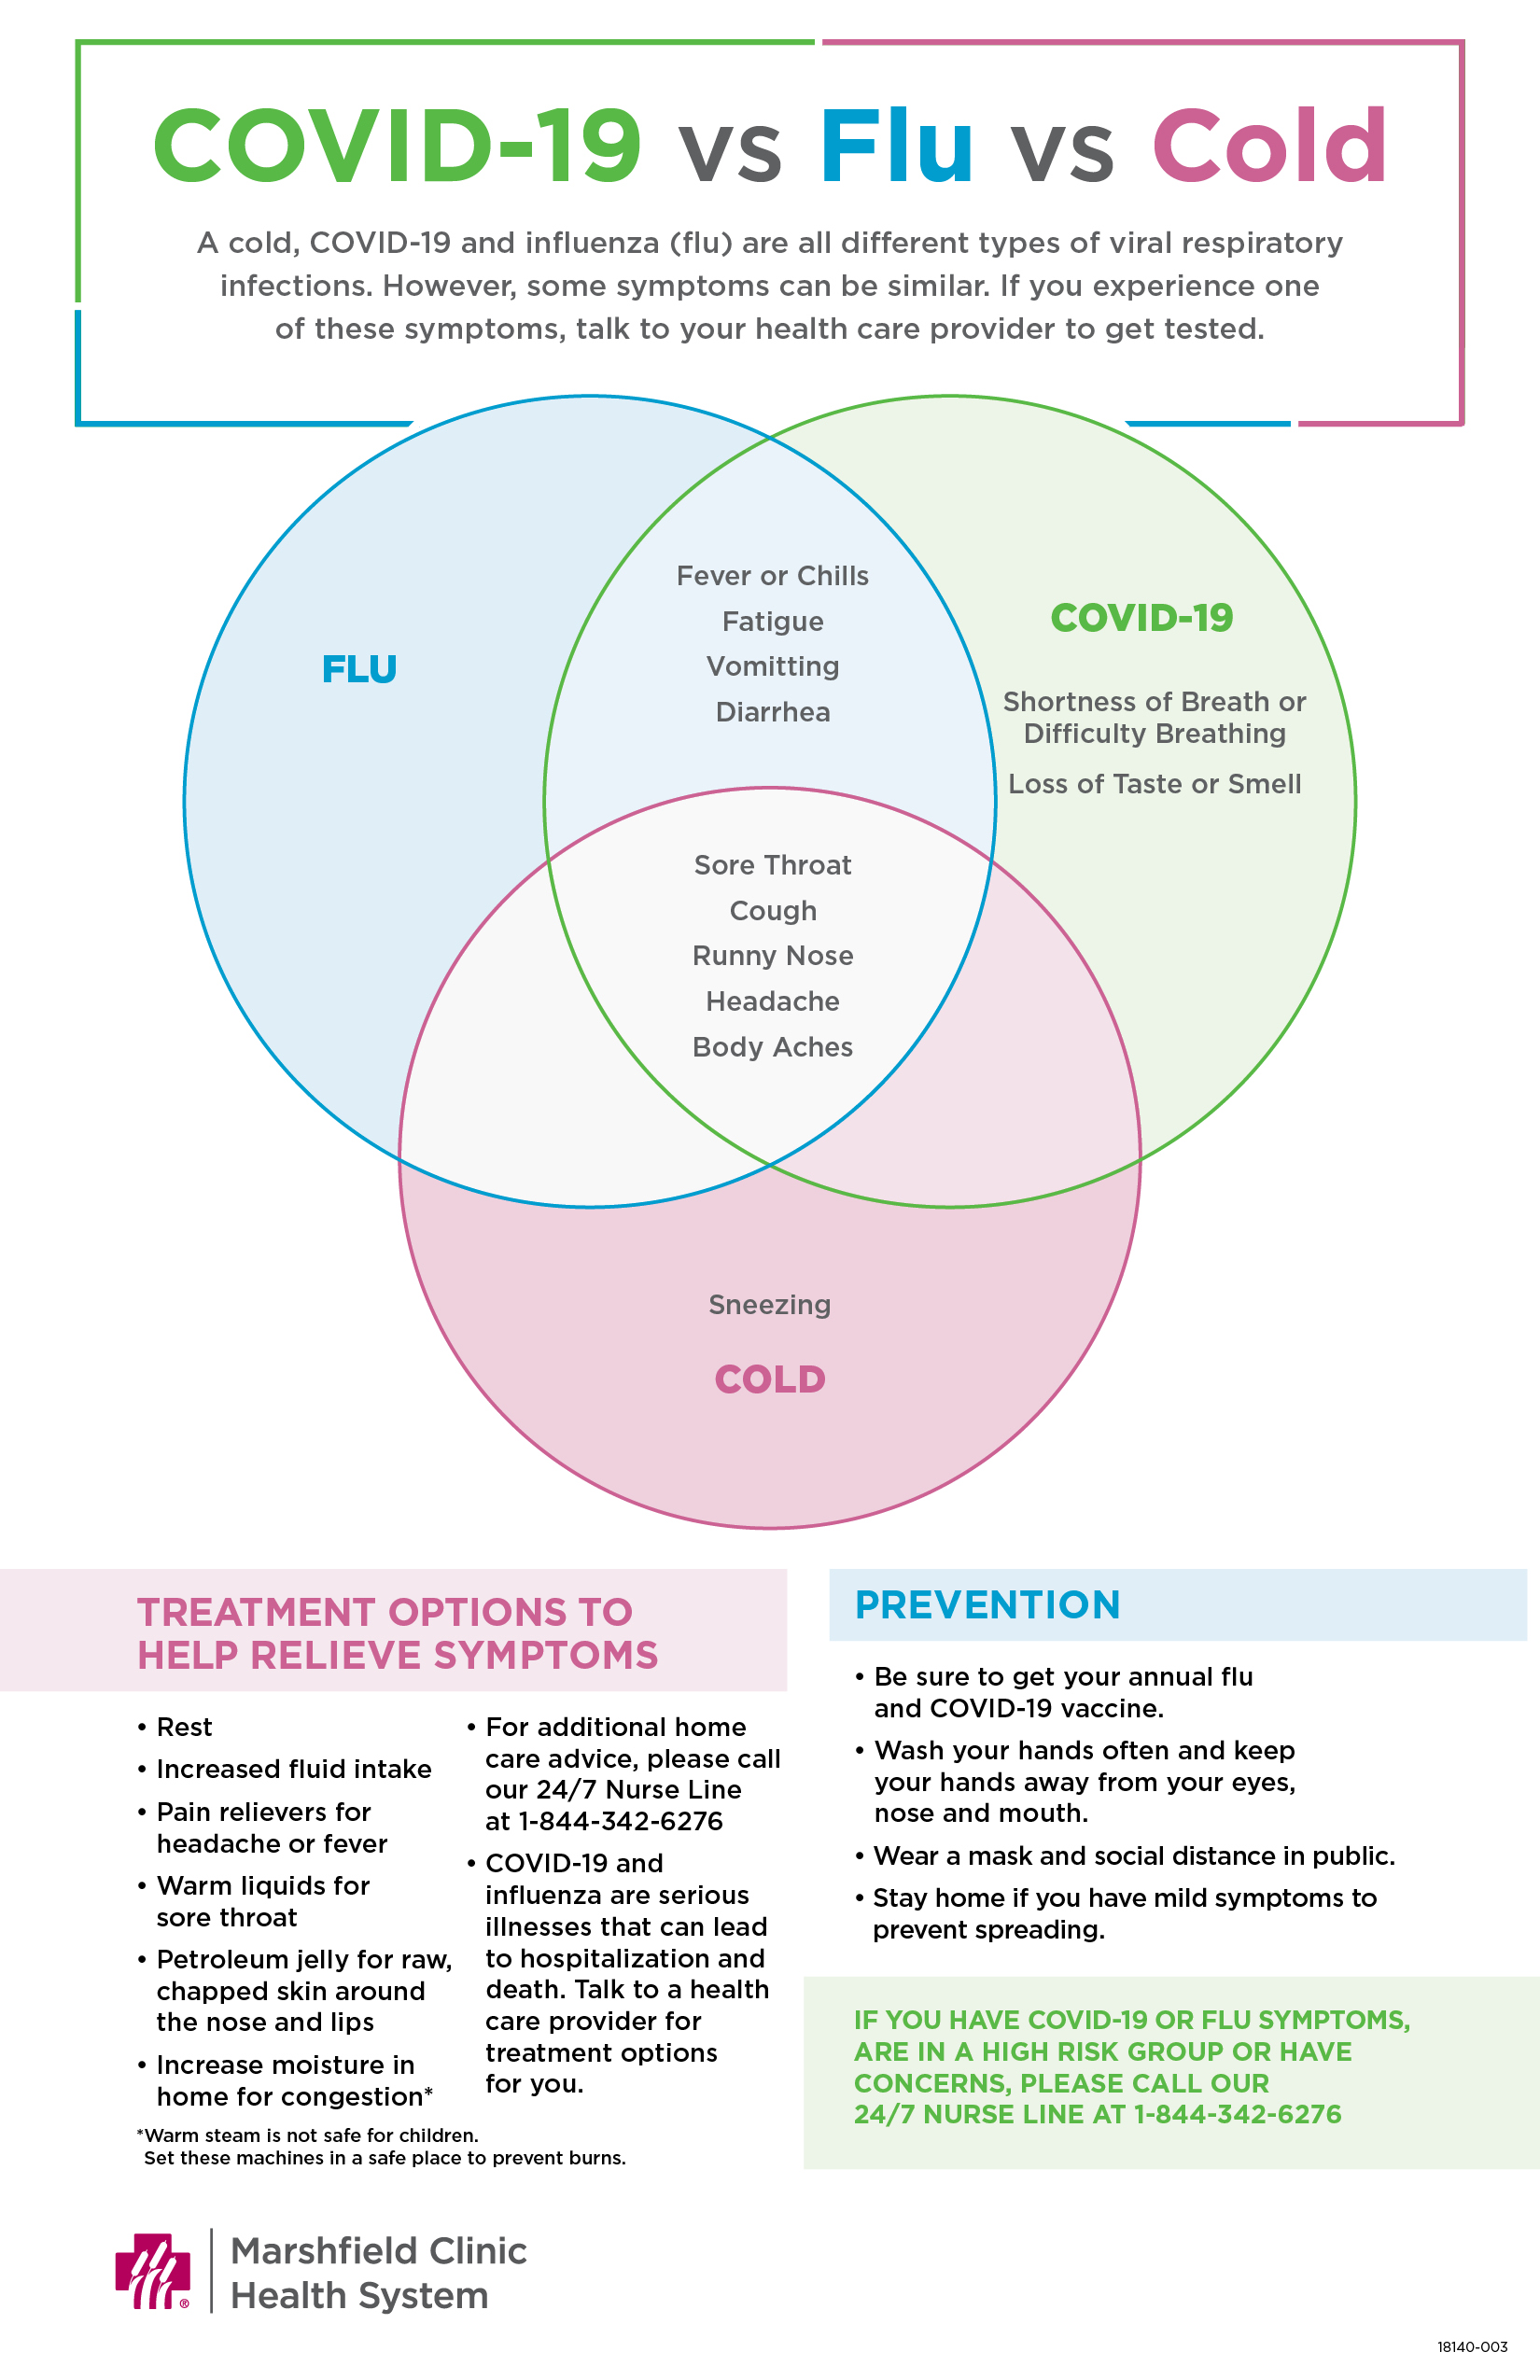 COVID-19 vs. Flu vs. Cold